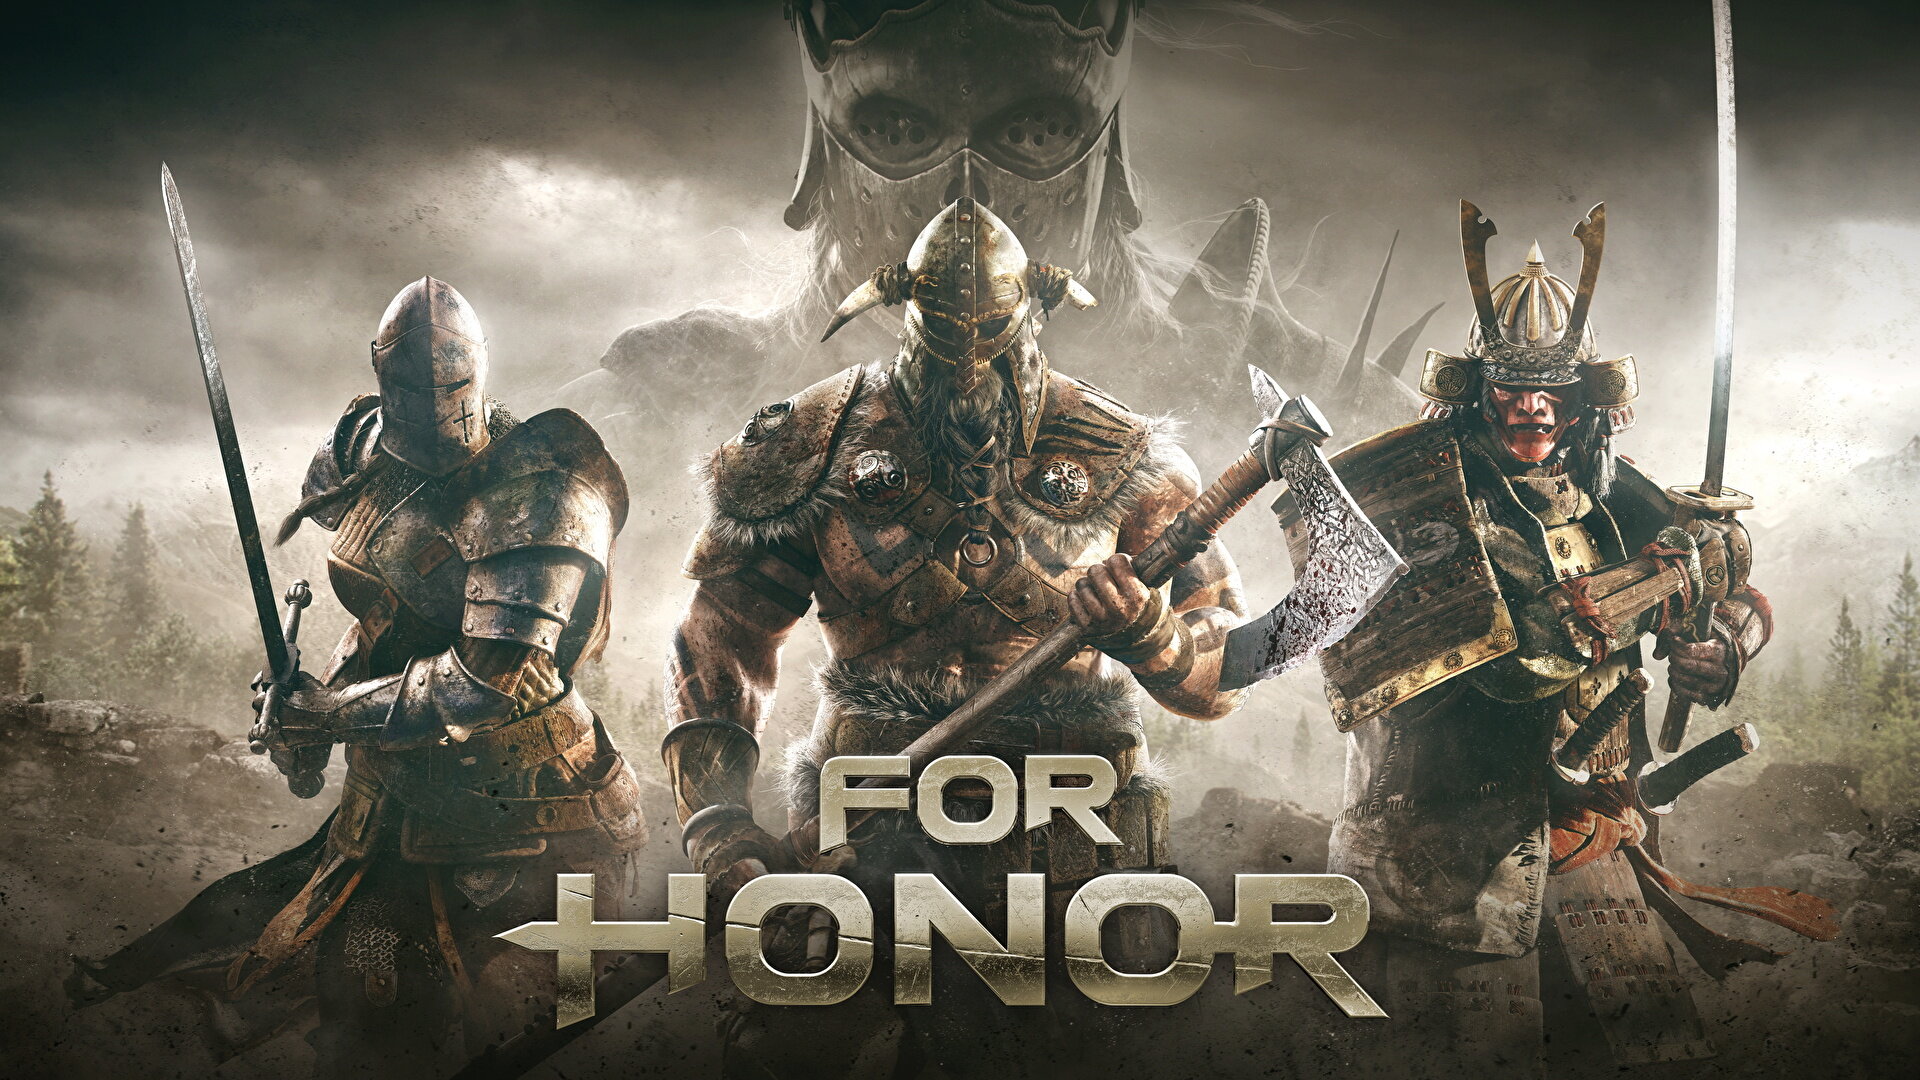 For_Honor_Warriors_Three_509902_1920x1080.jpg